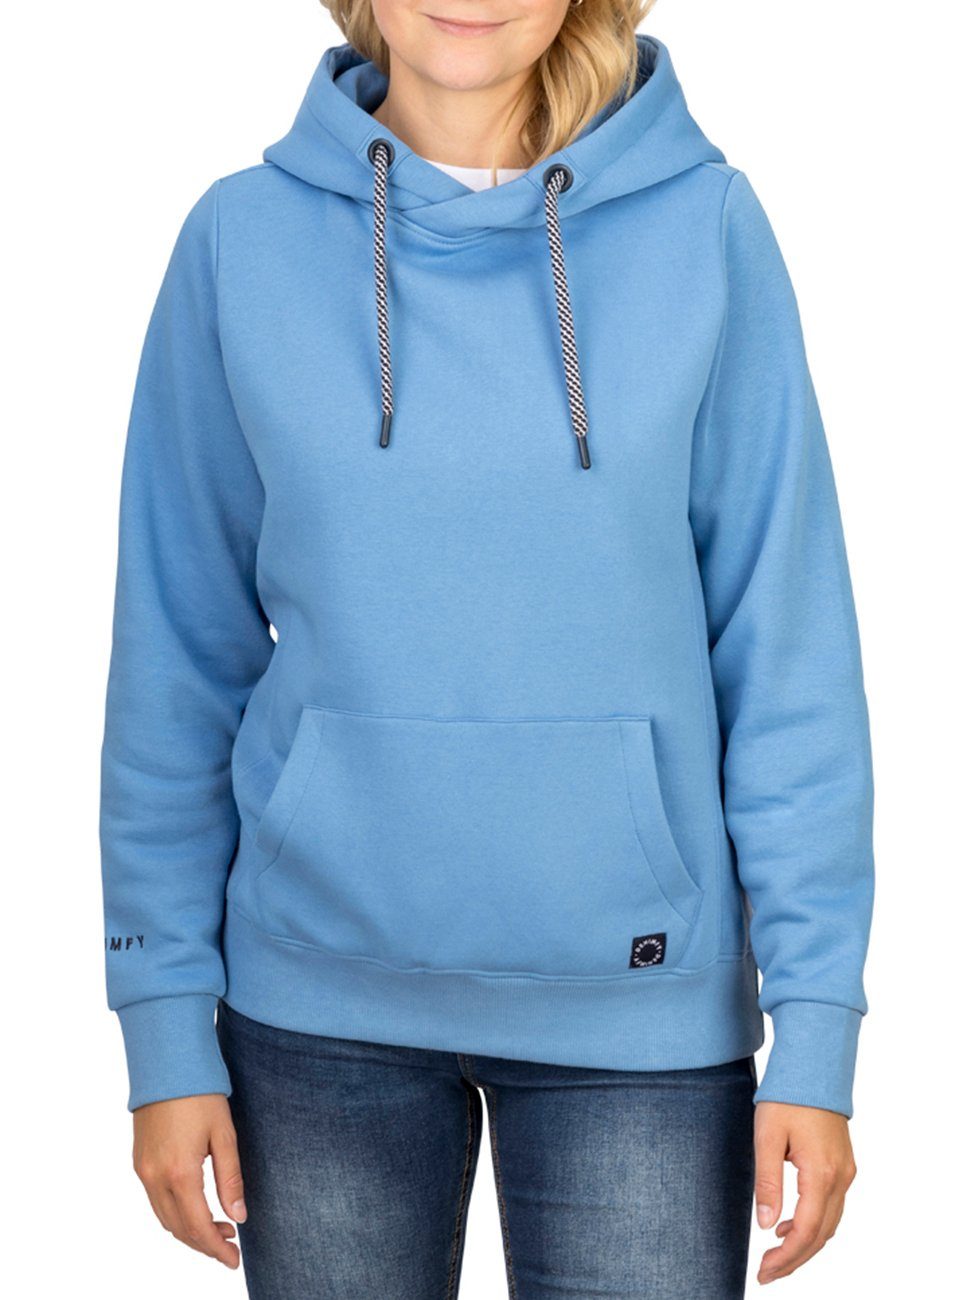 DENIMFY Kapuzenpullover Damen Hoodie DFEmma Regular Fit Longsleeve Sweatshirt mit Kängurutasche Daily Blue (19300)